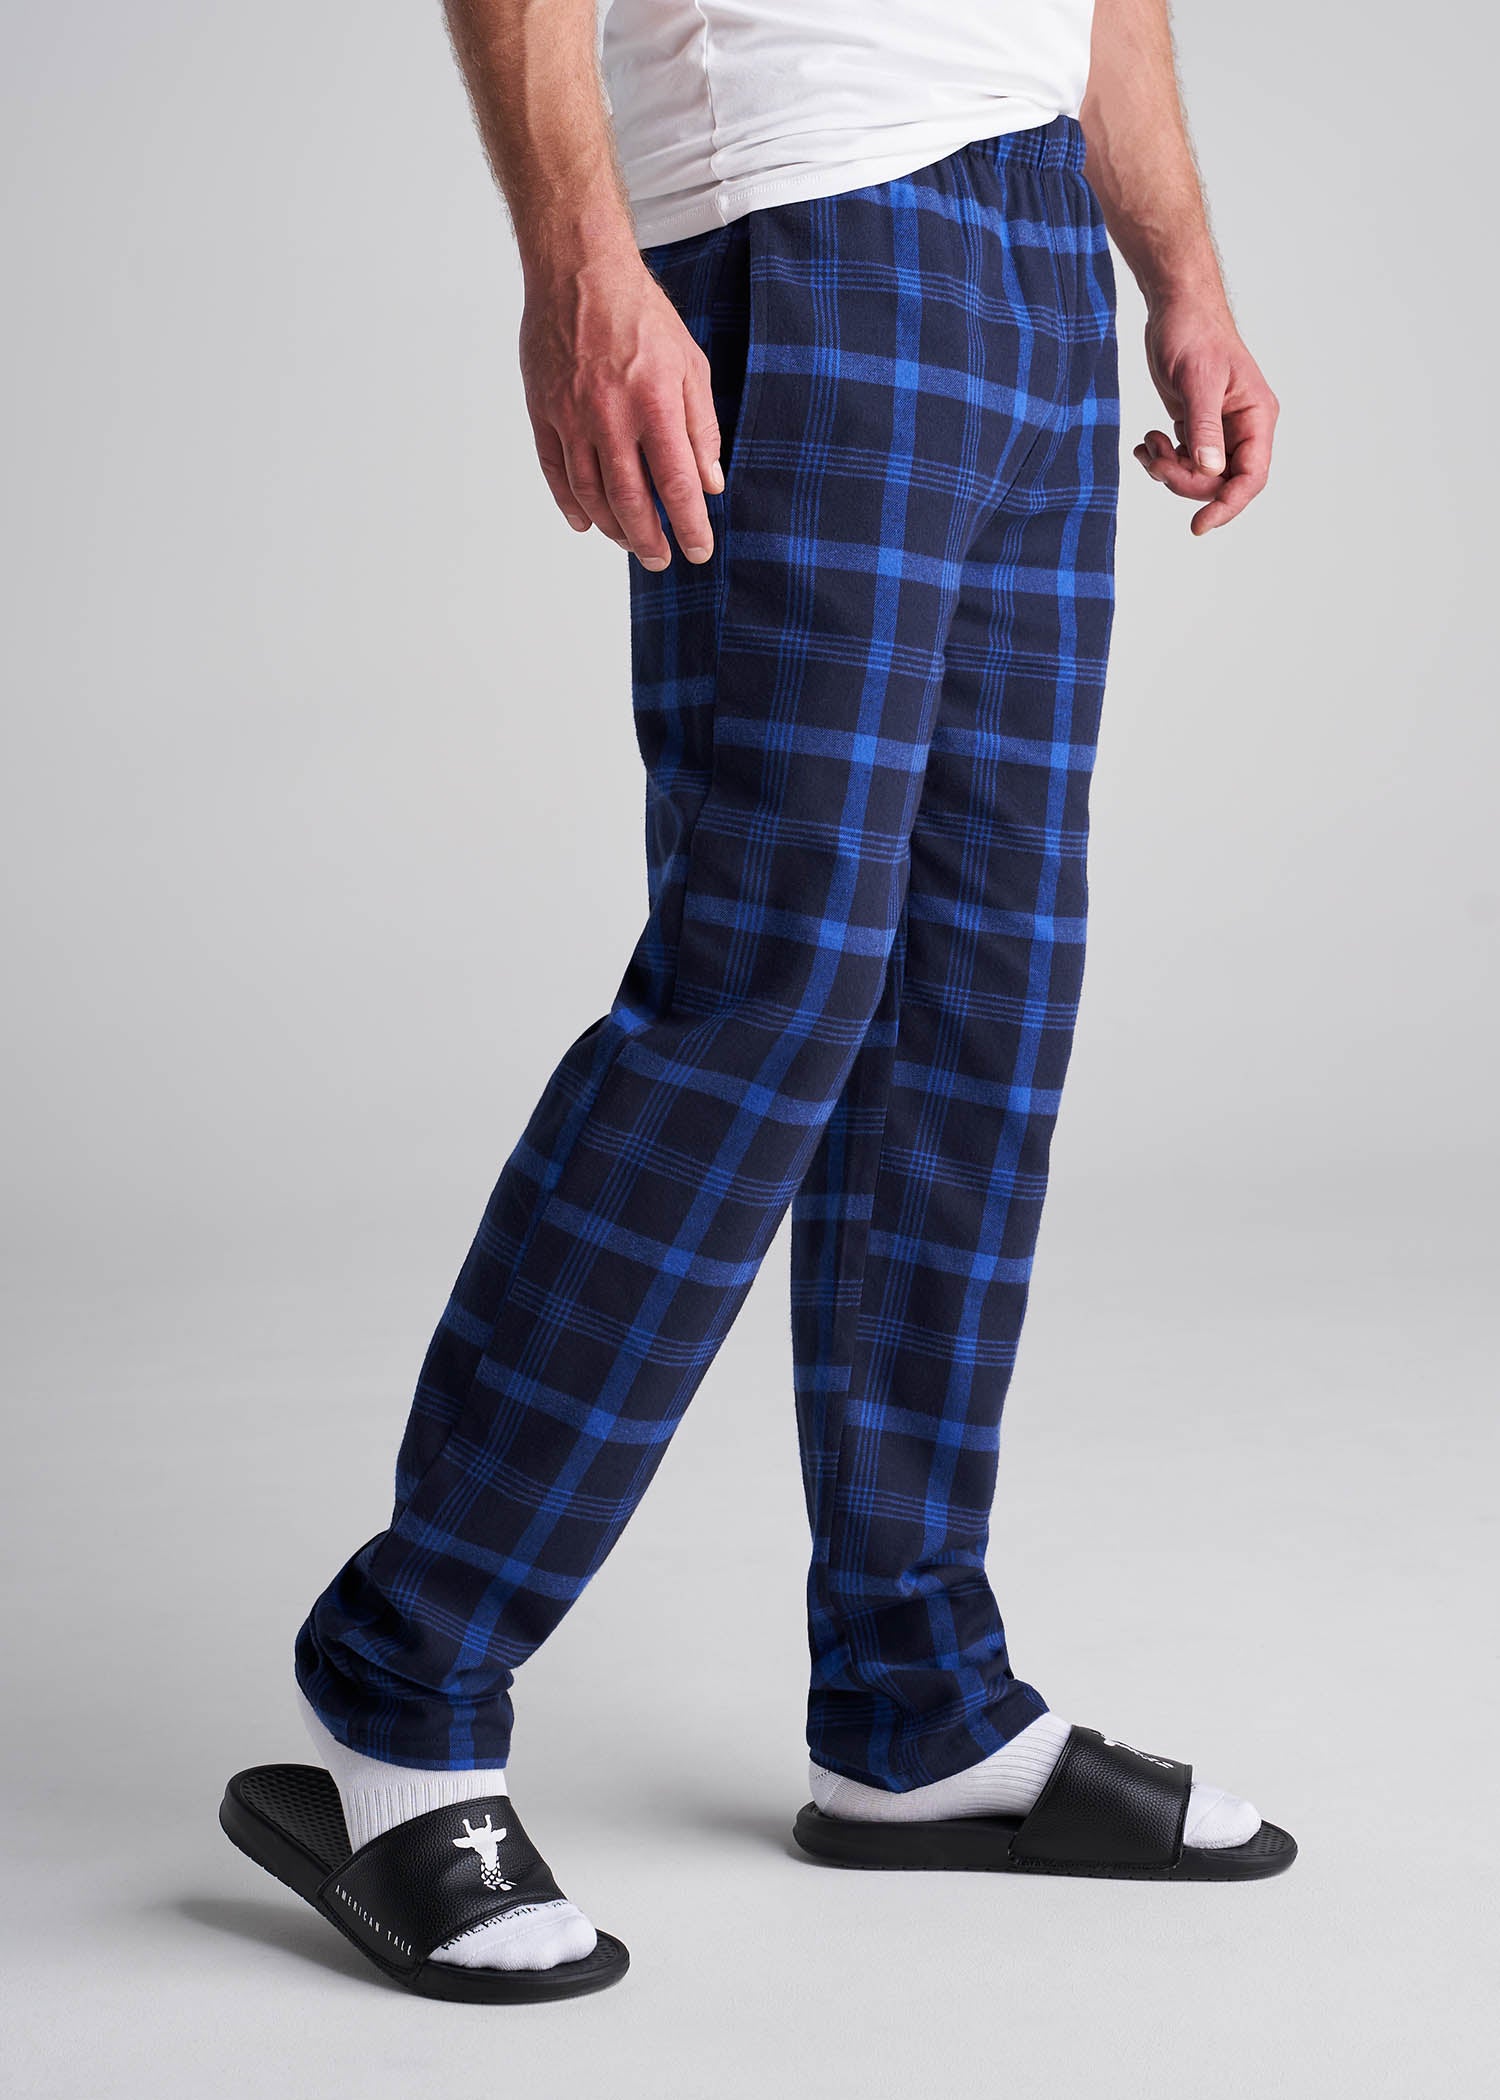 Tall Men's Pajama Bottom: Flannel, Classic Plaid (Green/Blue) –  ForTheFit.com